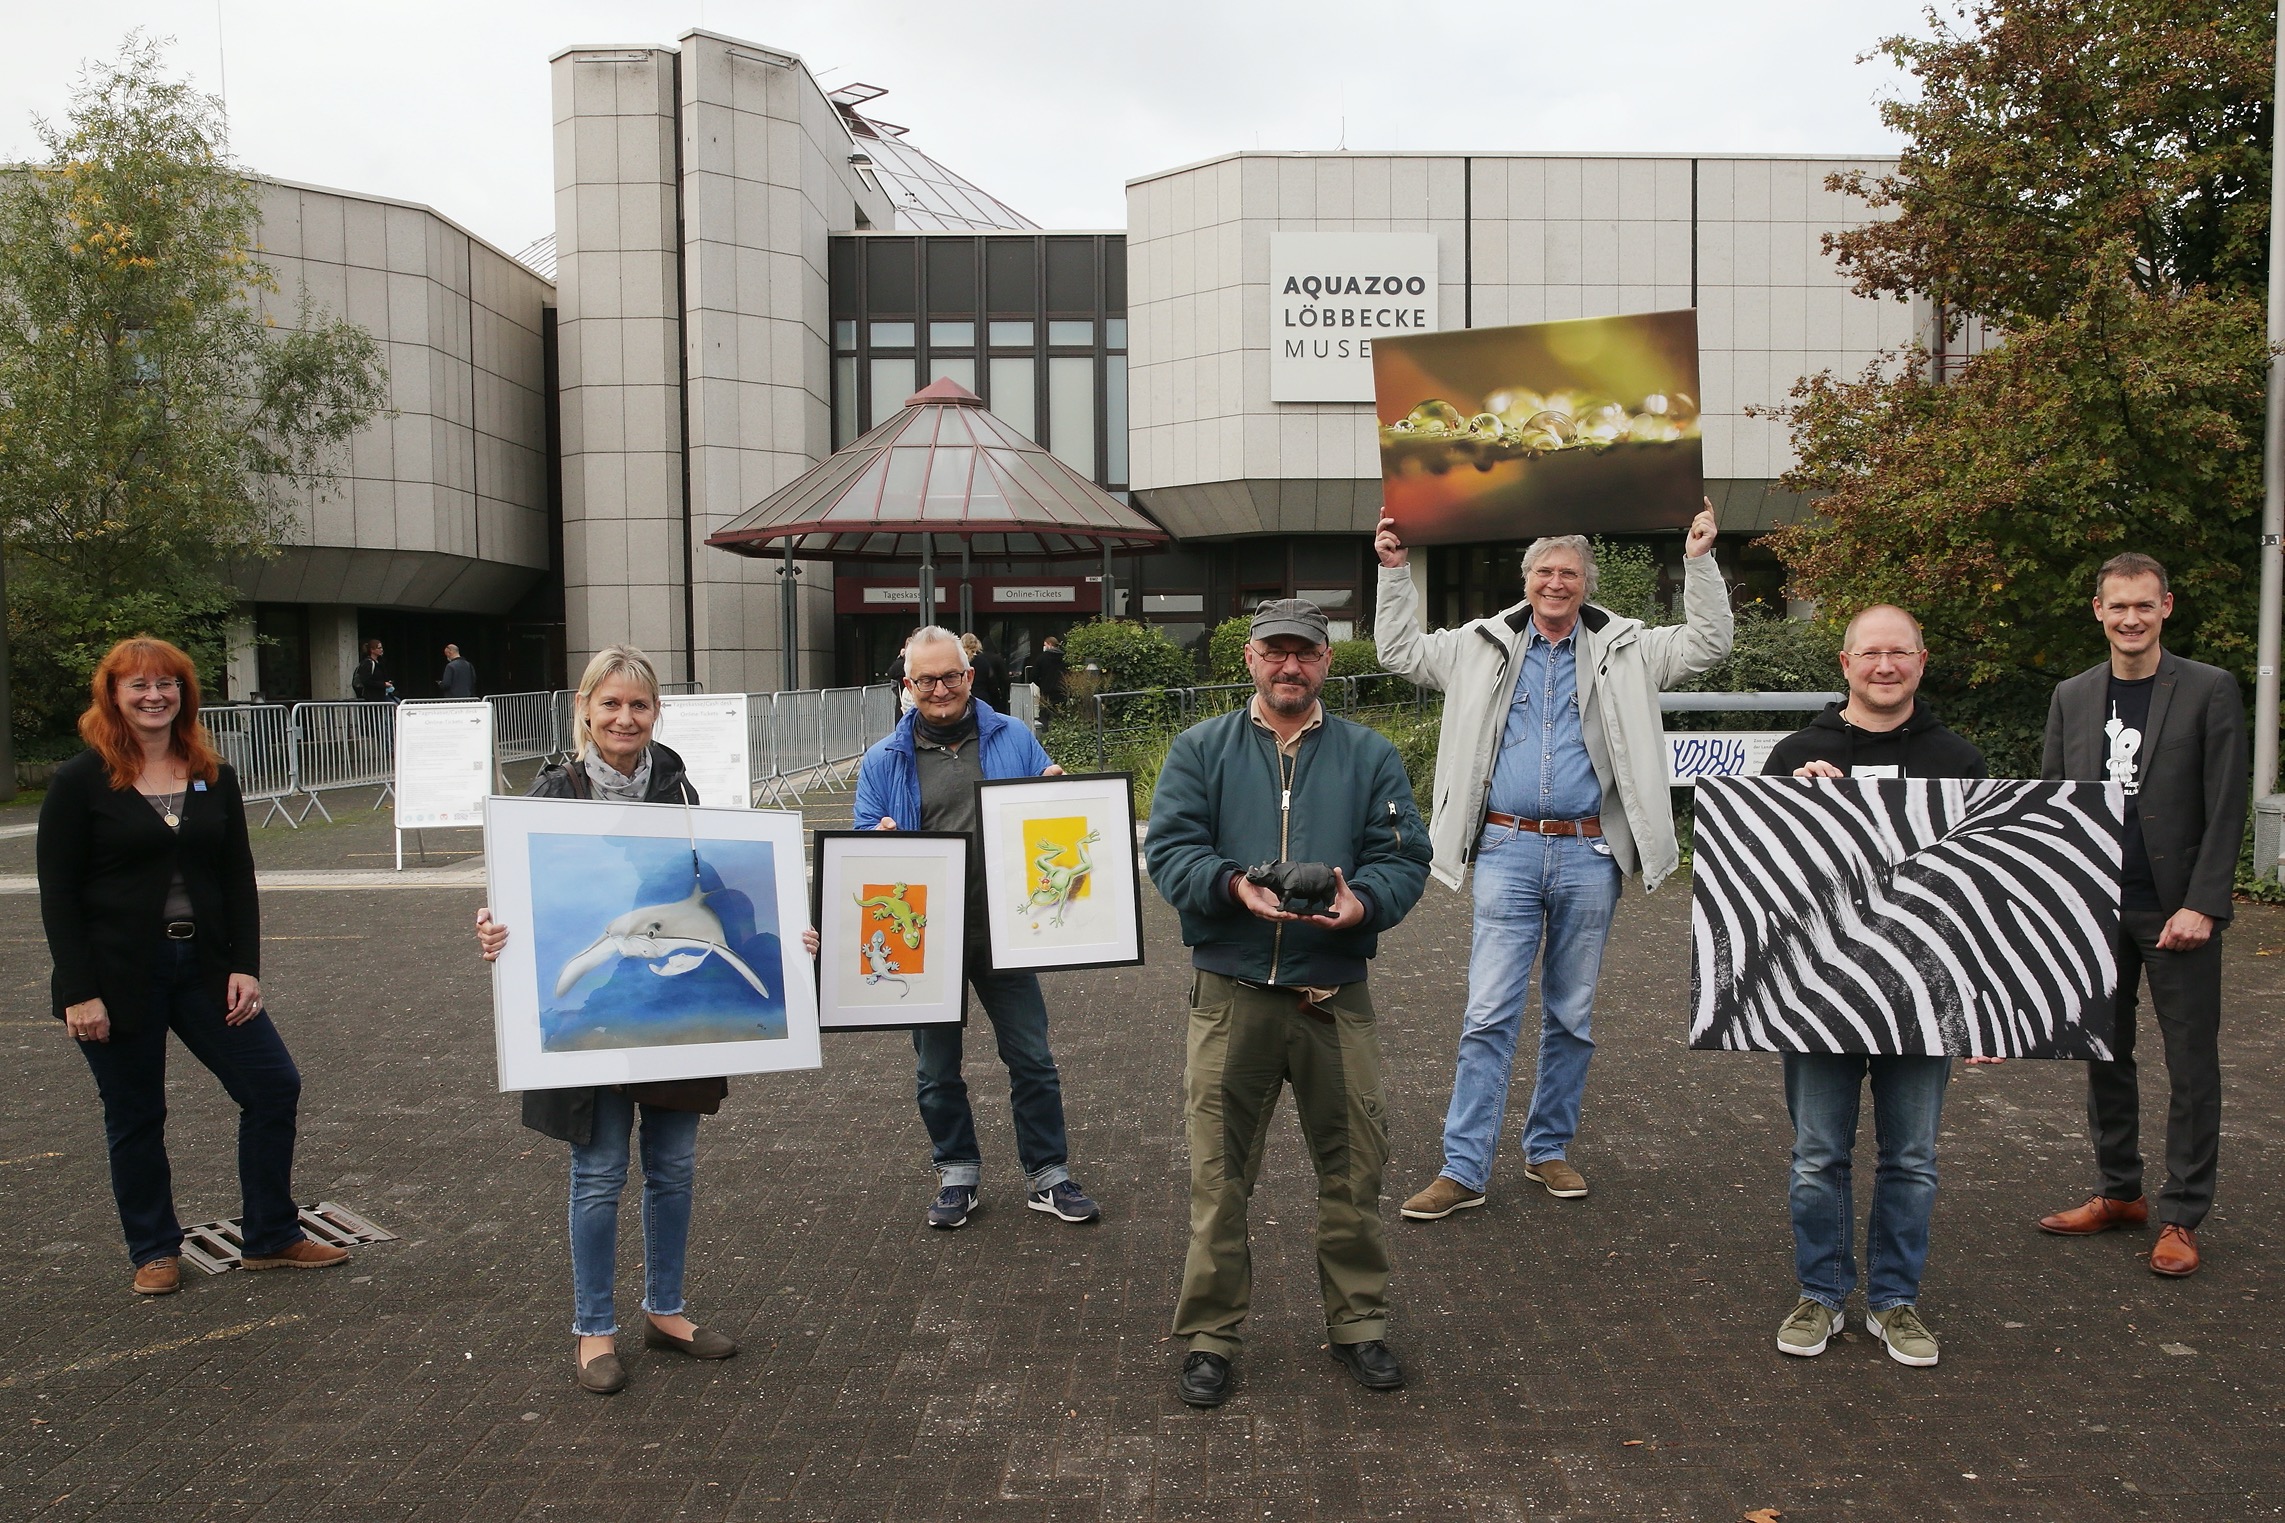 Aquazoo Team, , "Artists for our Nature": Kunst für den Artenschutz im Aquazoo Löbbecke Museum